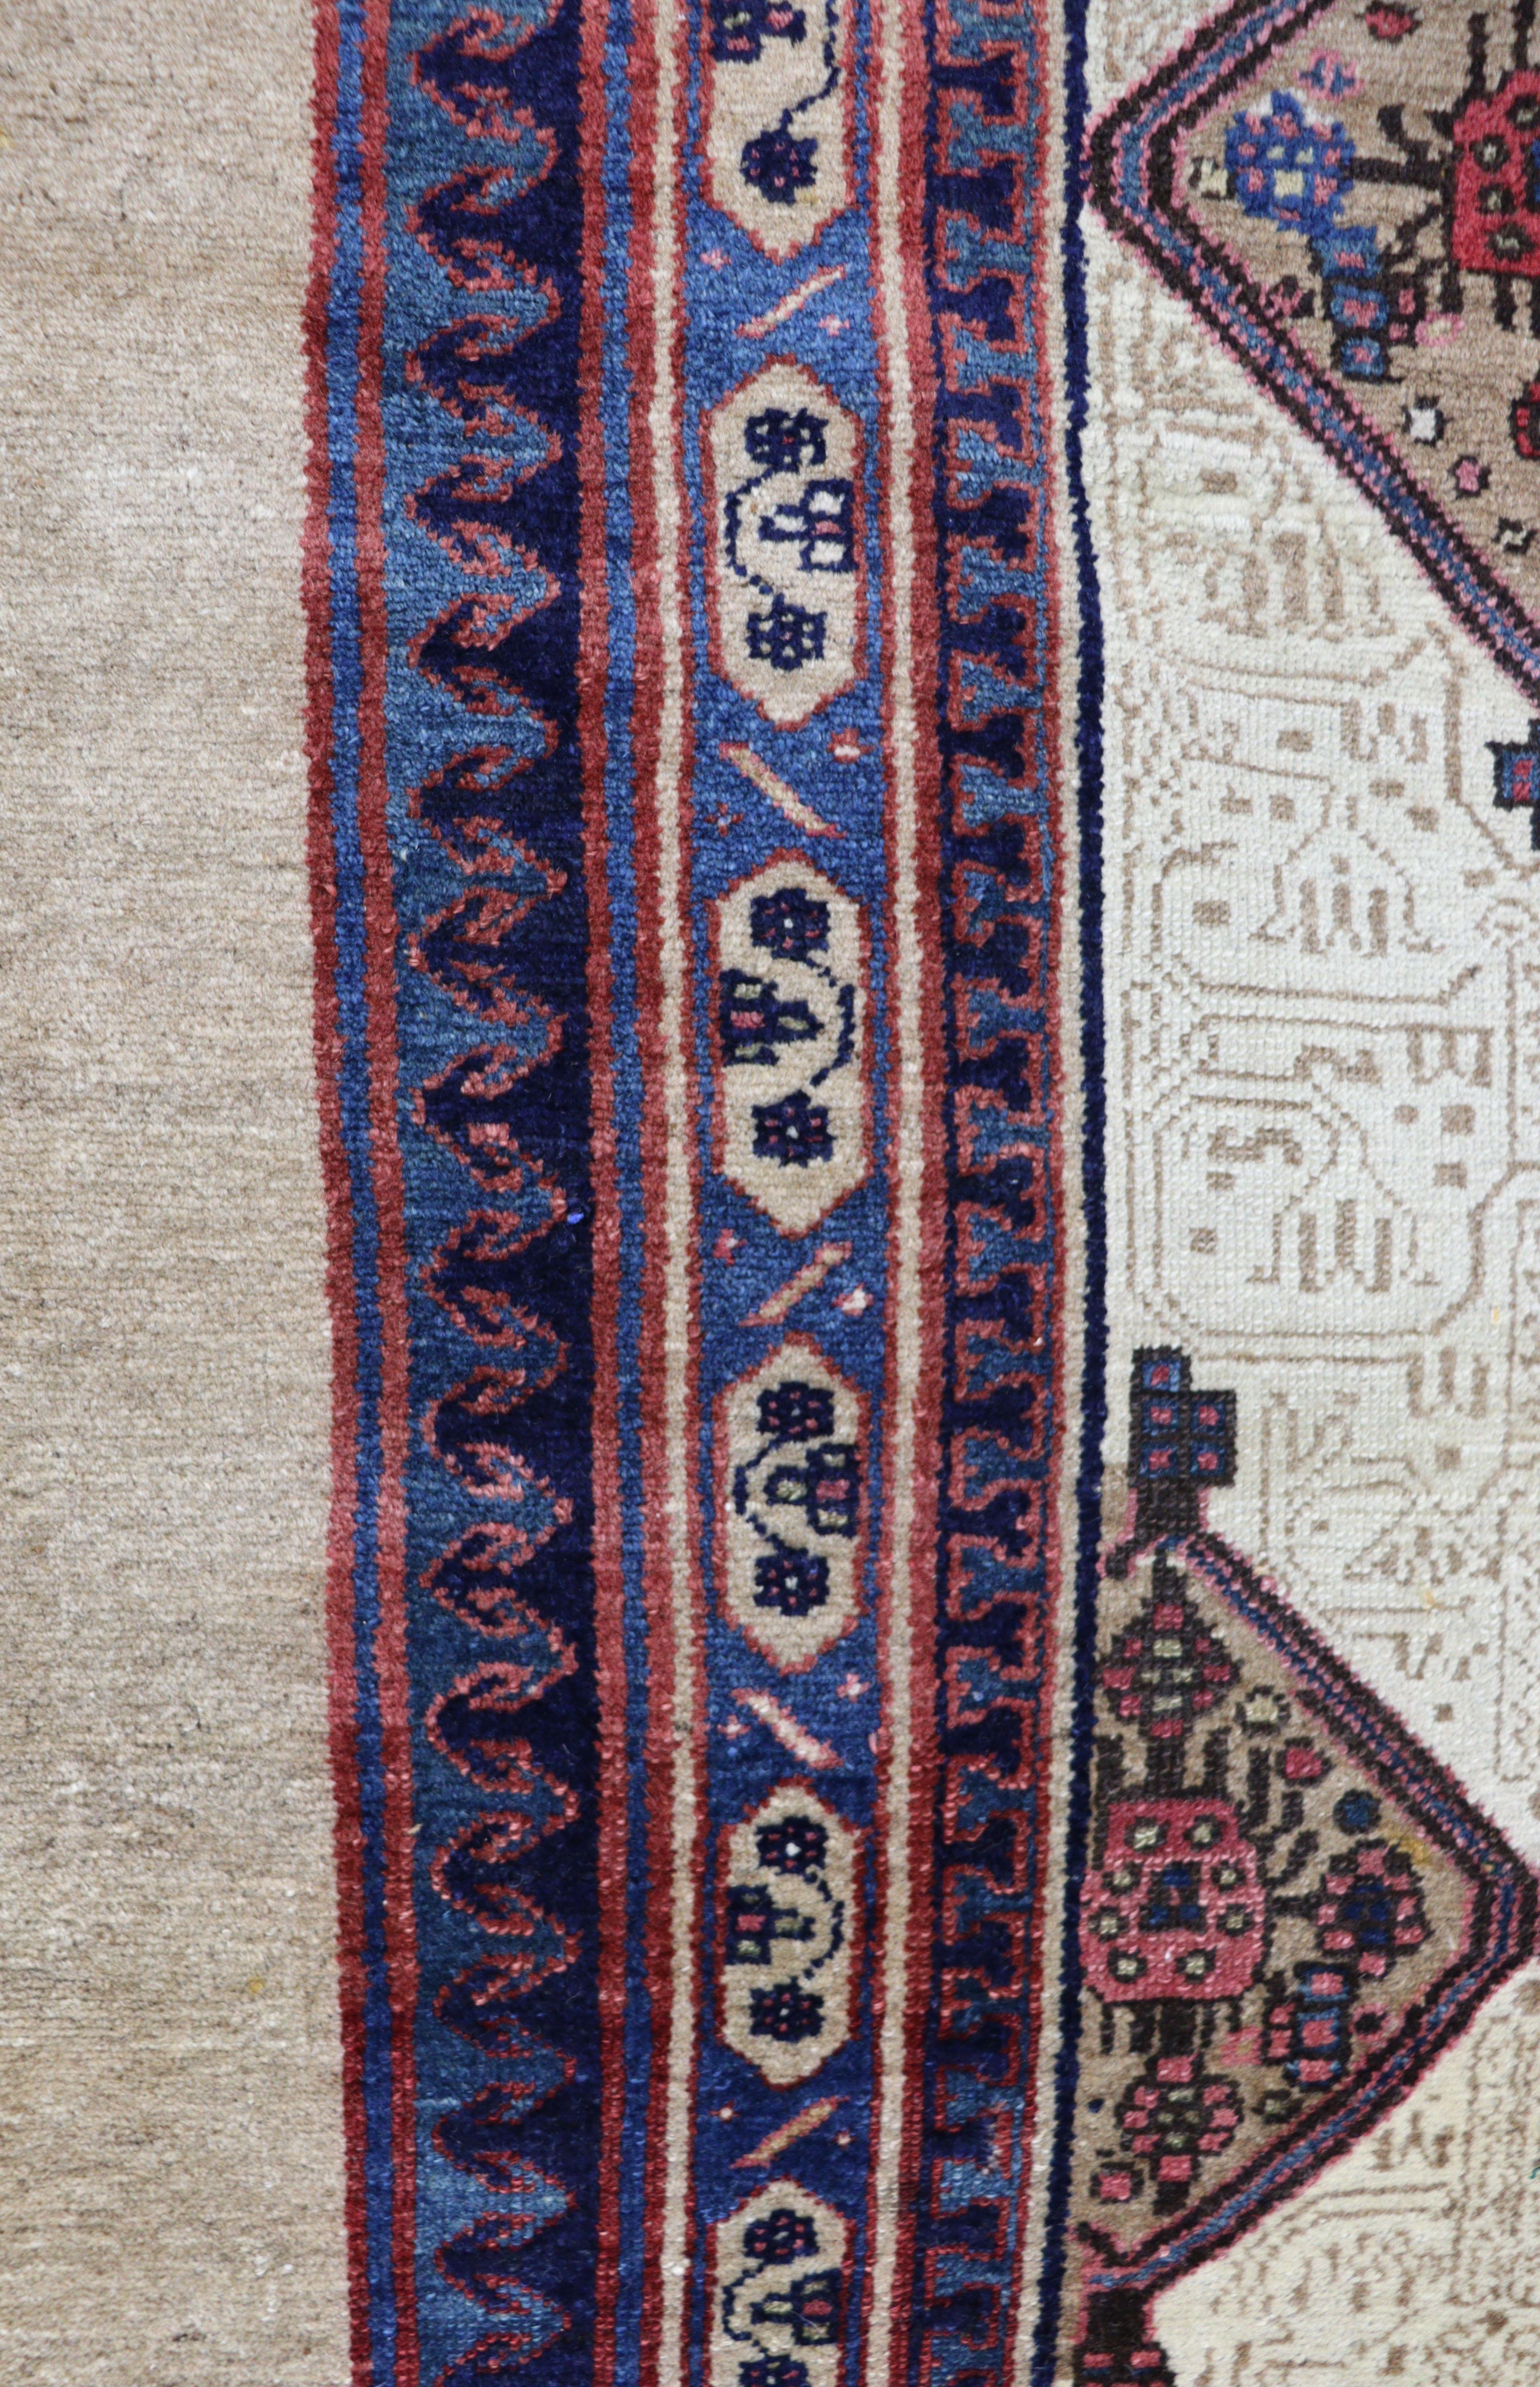 19th Century Antique Persian Serab/Serapi Gallery Size Rug, Camel Color, 4'6